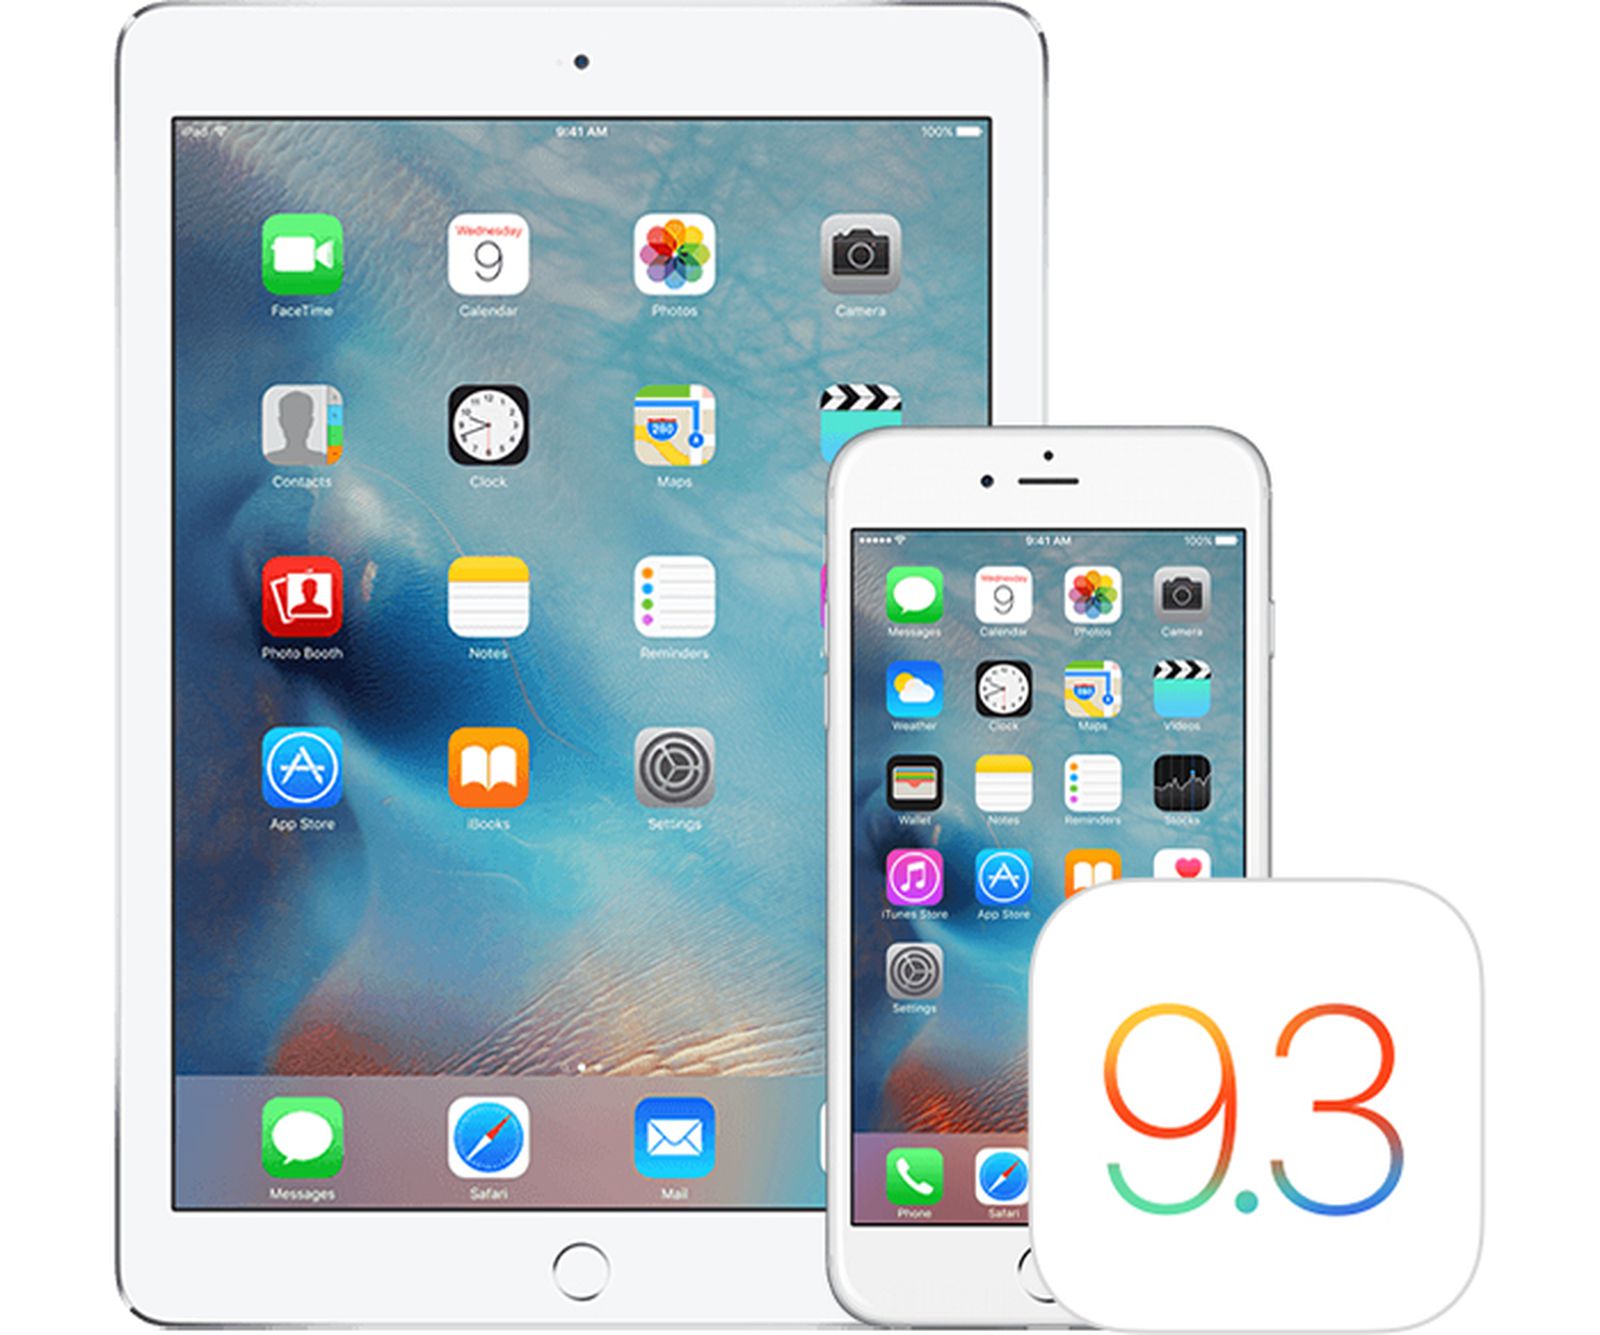 Jailbreak iOS 16.3 On iPhone And iPad Latest Status Update